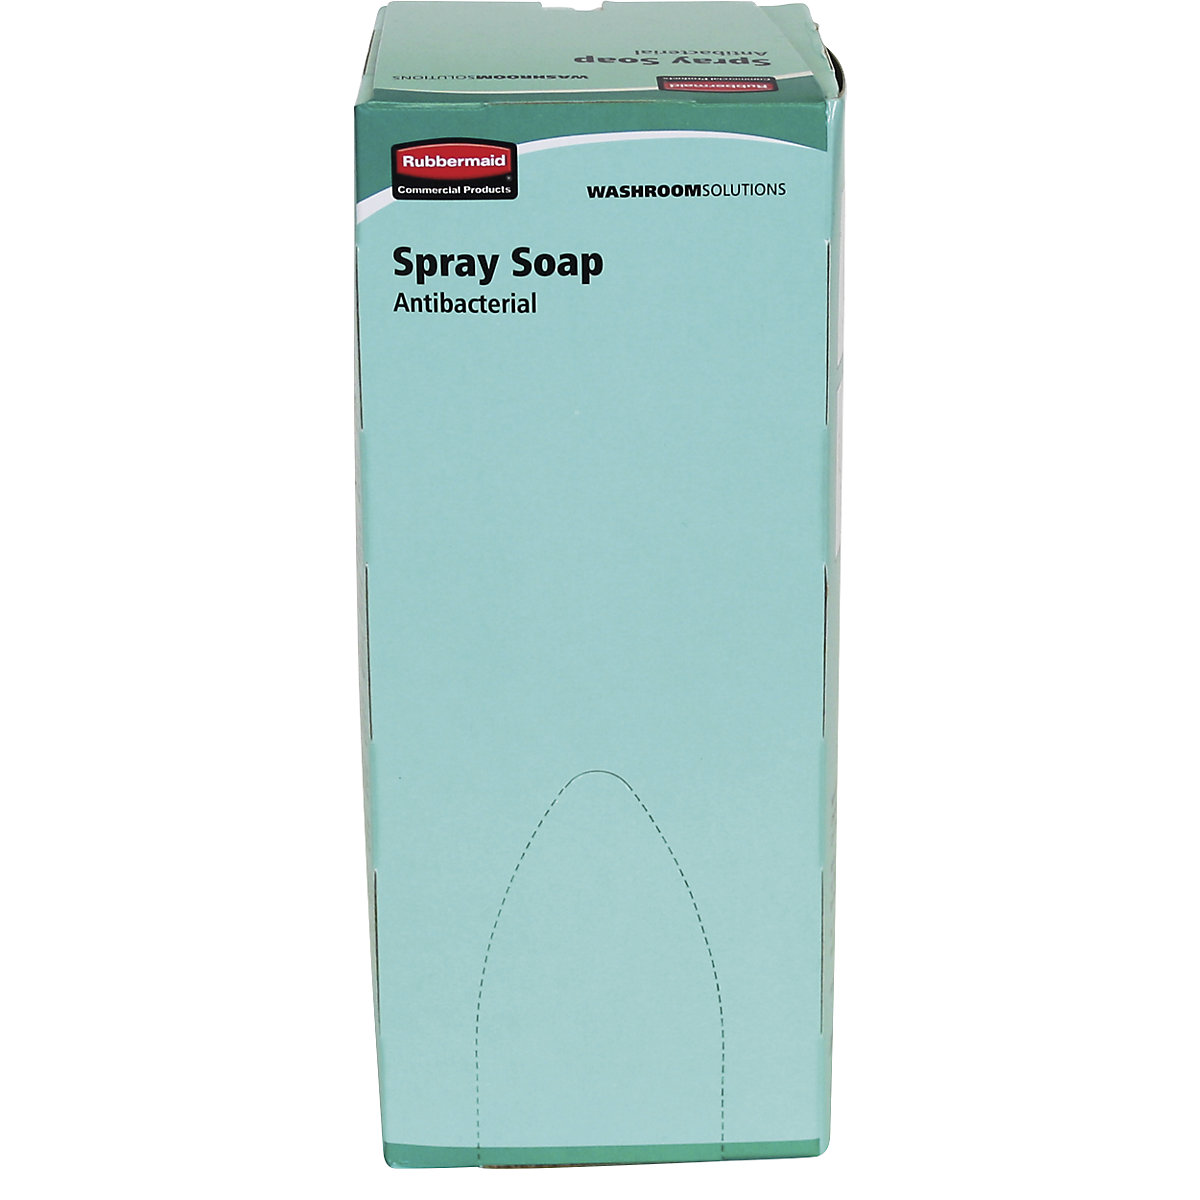 Antibacterial spray soap - Rubbermaid